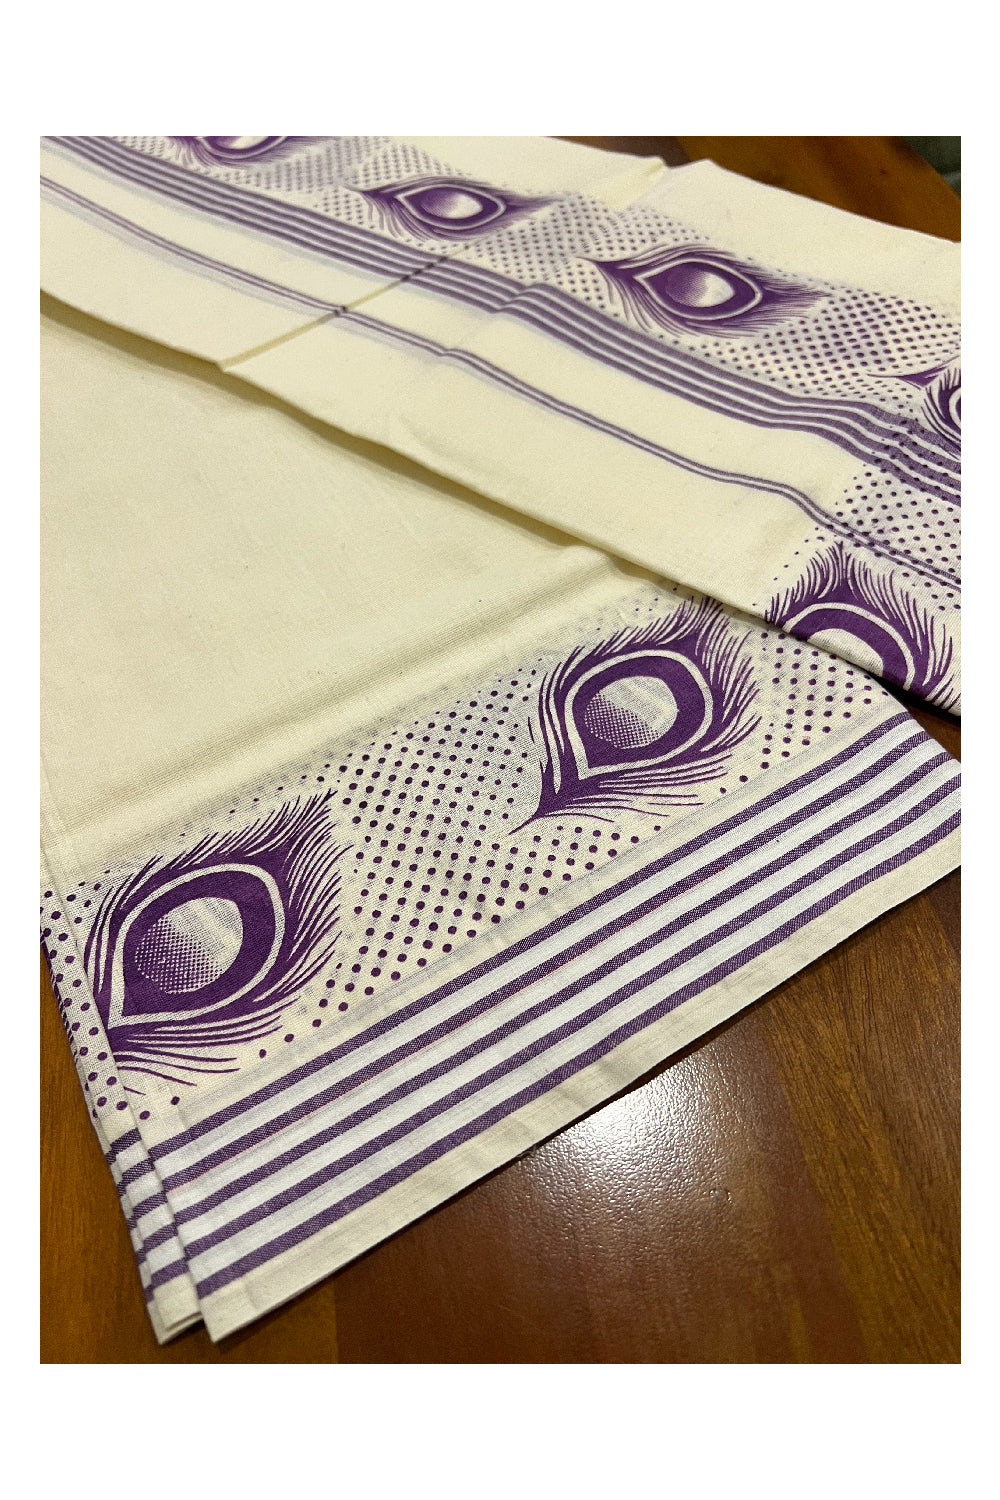 Southloom Mulloth Soft Cotton Set Mundu with Violet Kara and Block Print